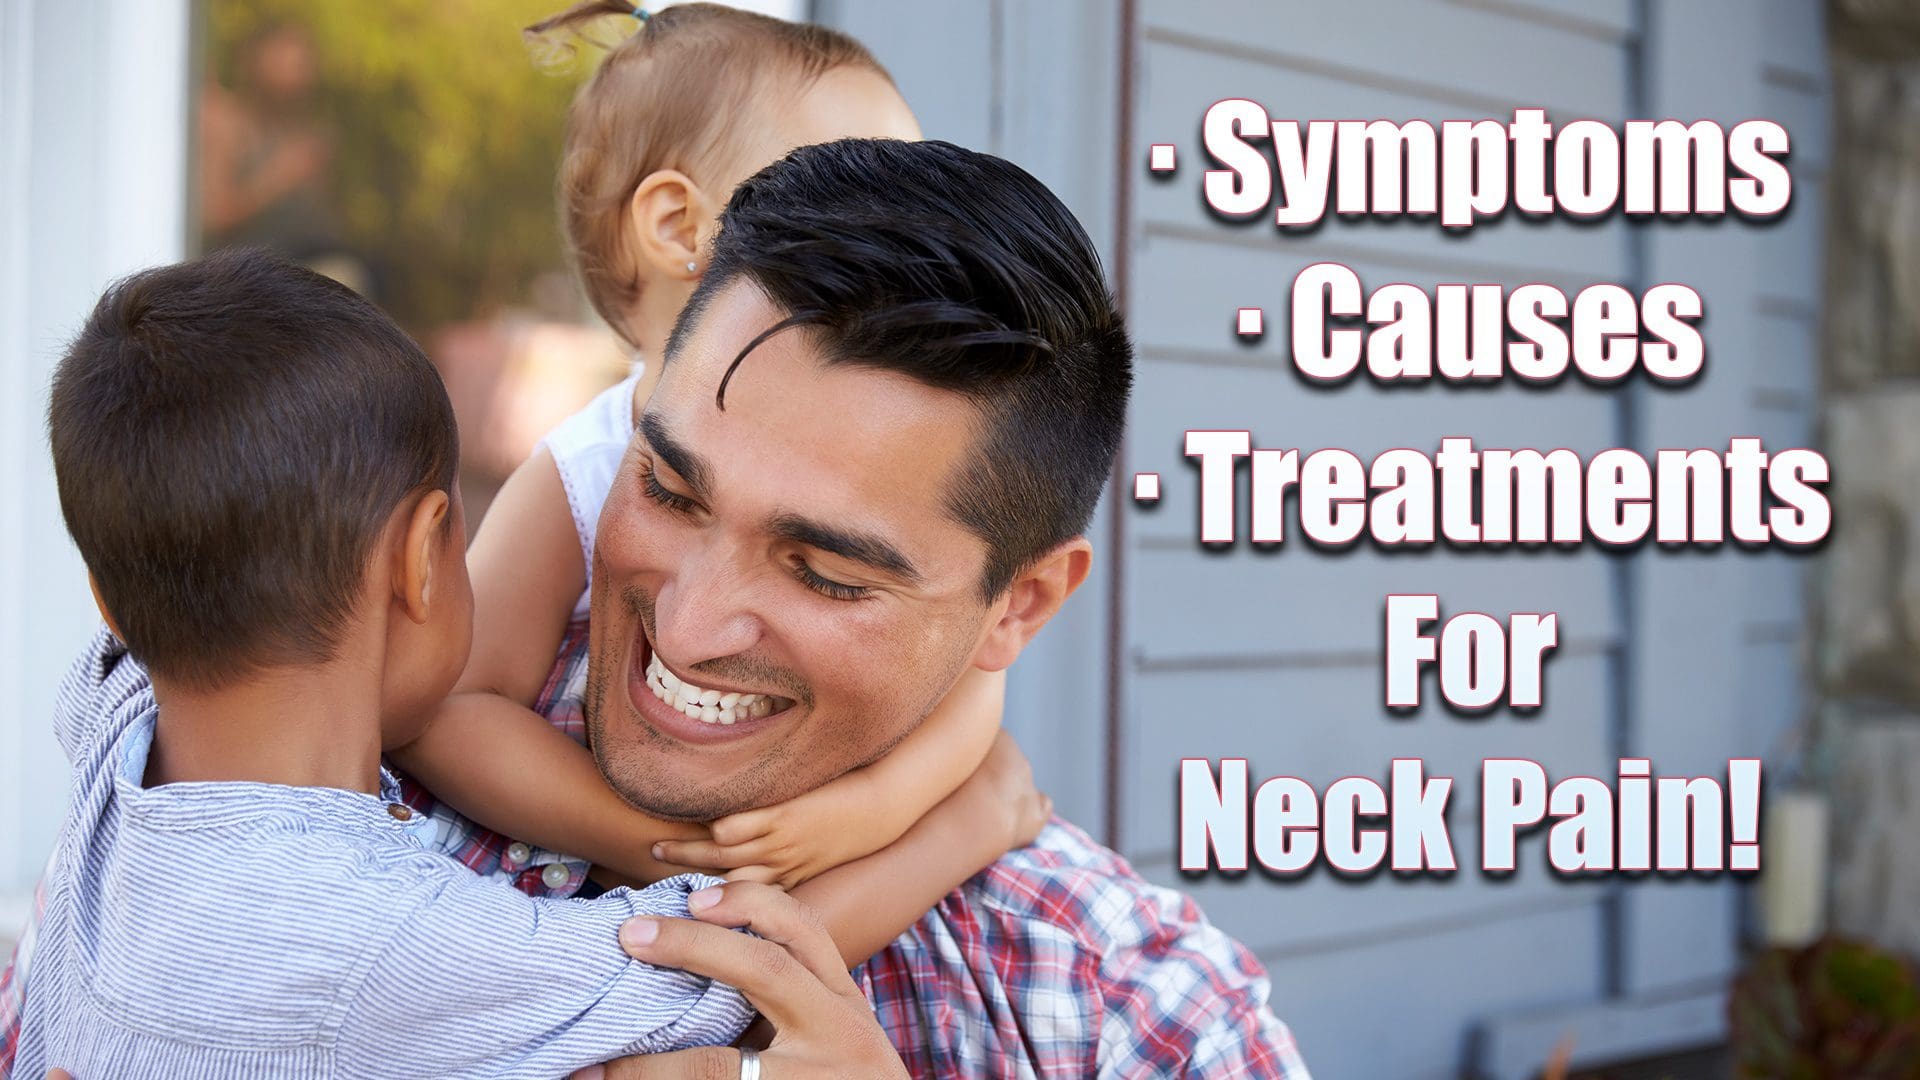 symptoms of neck pain chiropractic treatment el paso tx.